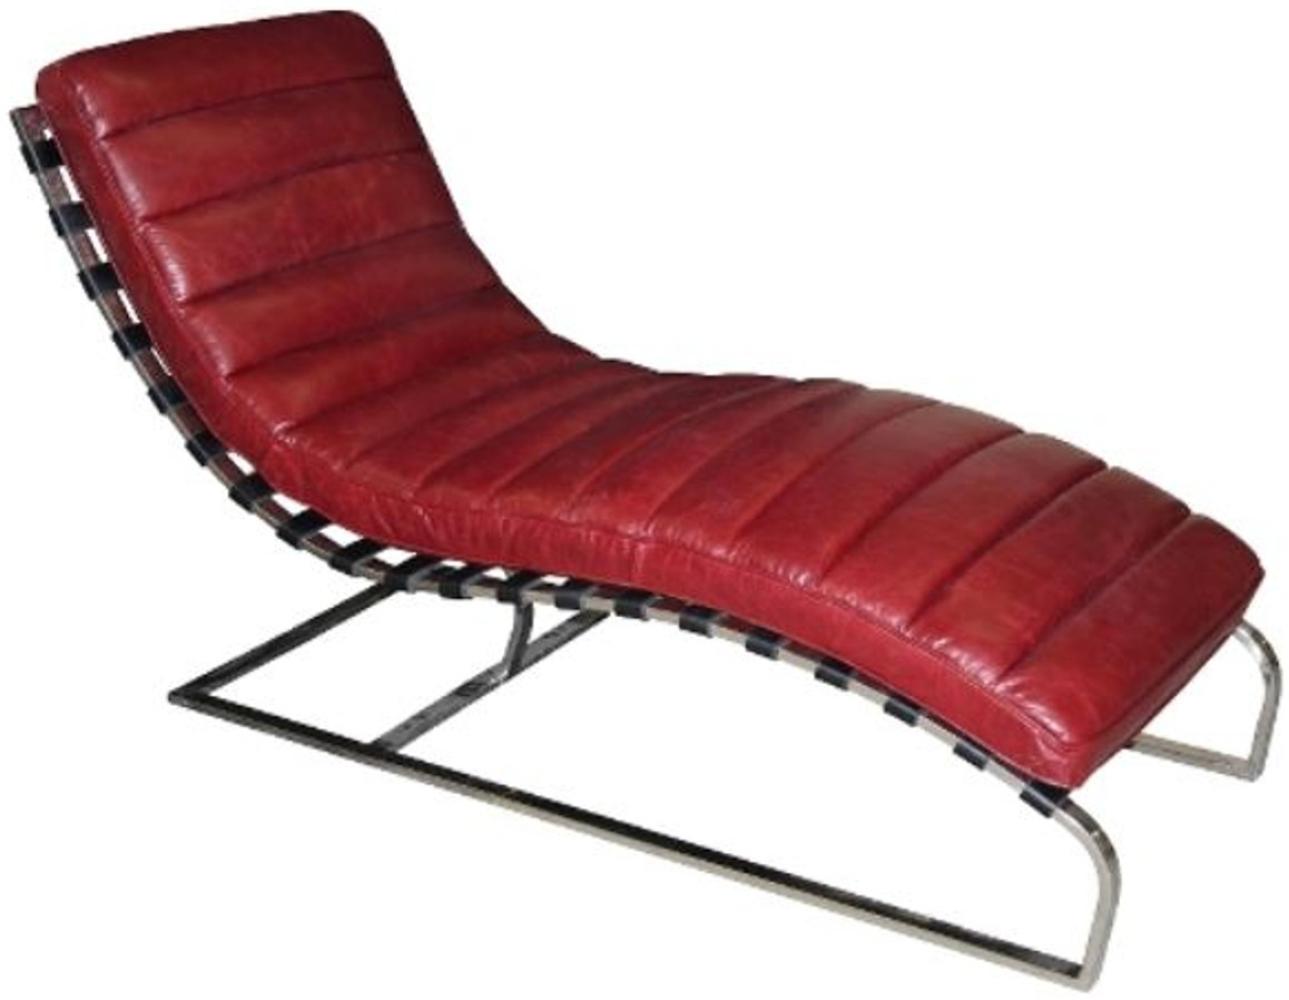 Casa Padrino Luxus Echtleder Lounge Sessel / Liege Rot 140 x 59 x H. 82 cm - Leder Art Deco Relax Sessel Bild 1